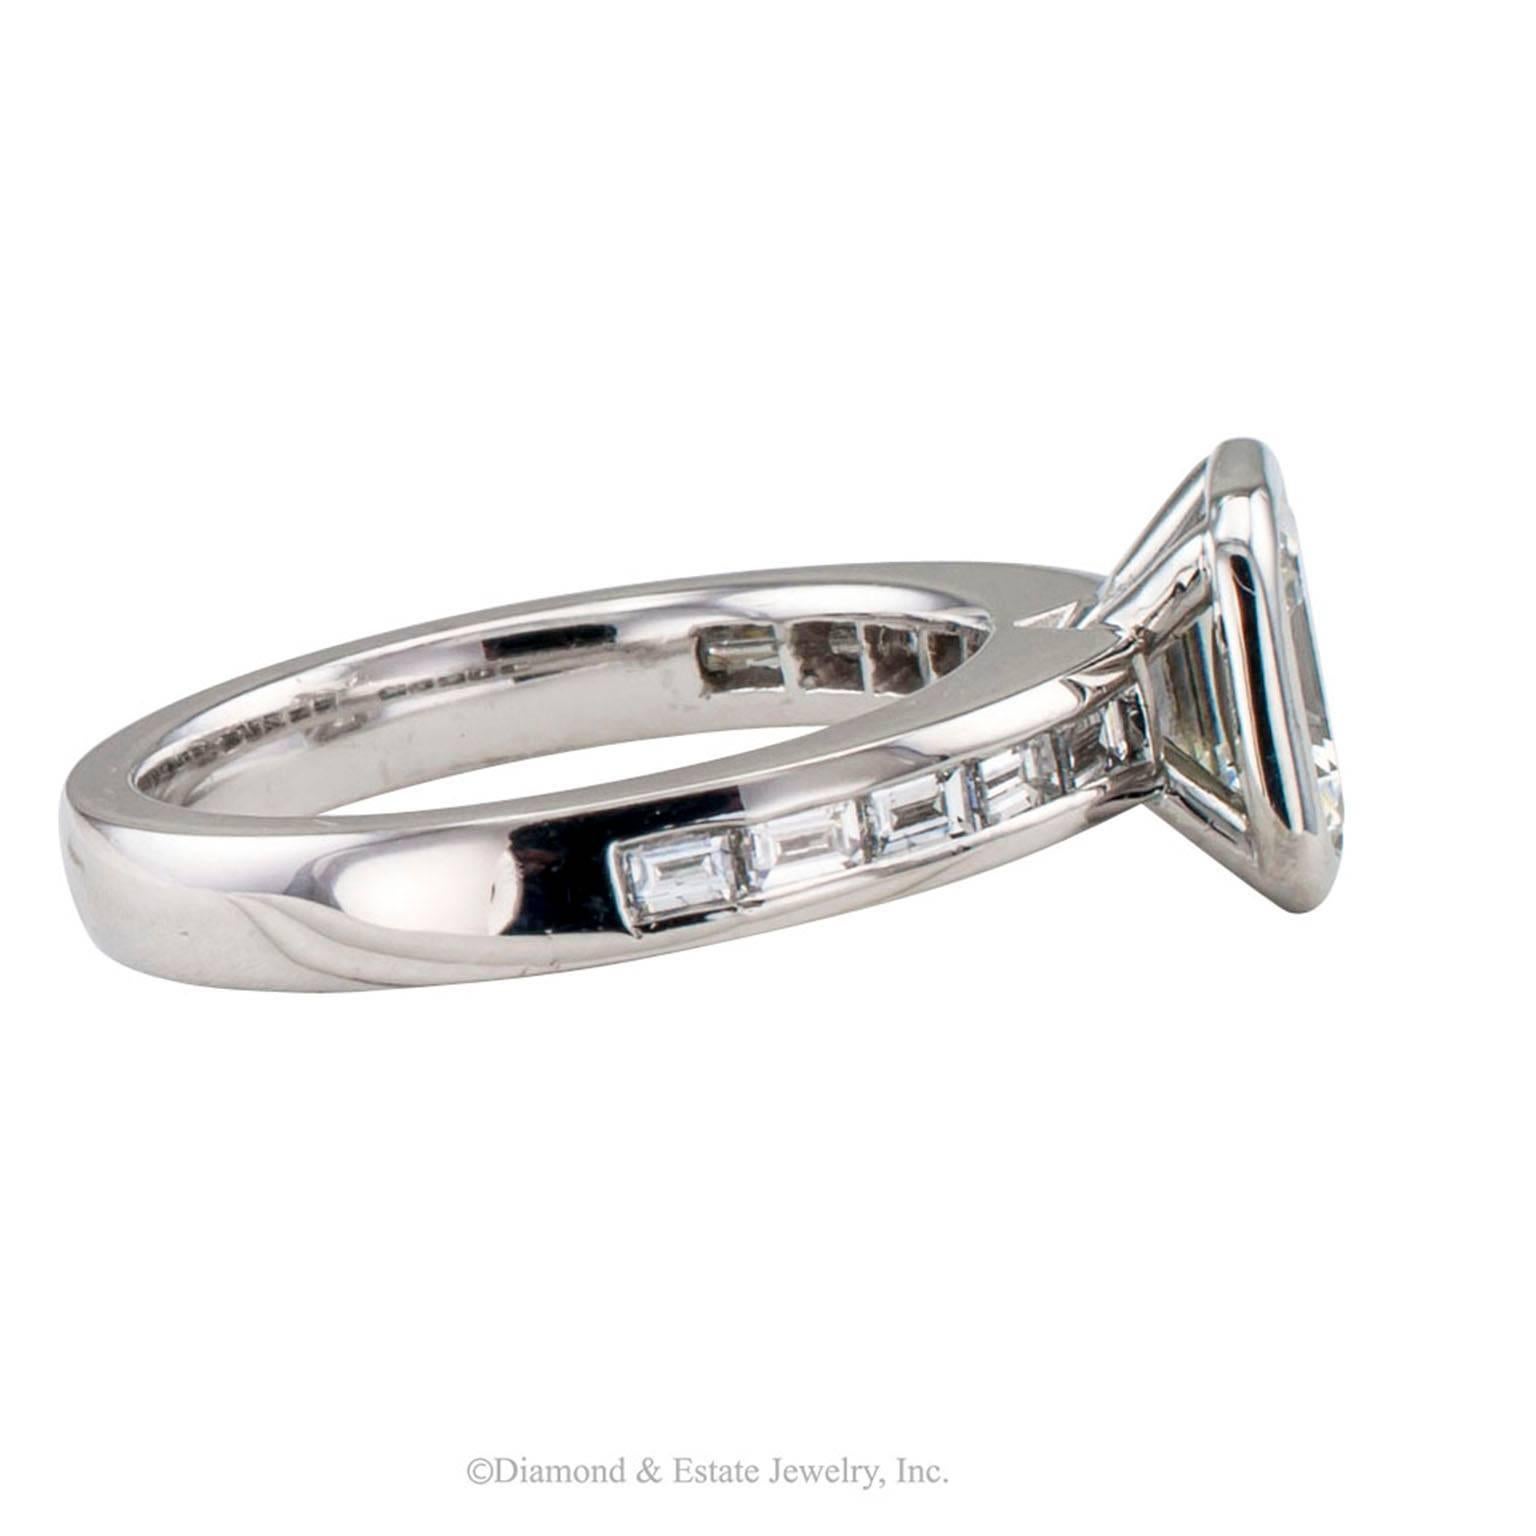 Contemporary 1.08 Carat Emerald Cut Diamond Engagement Ring